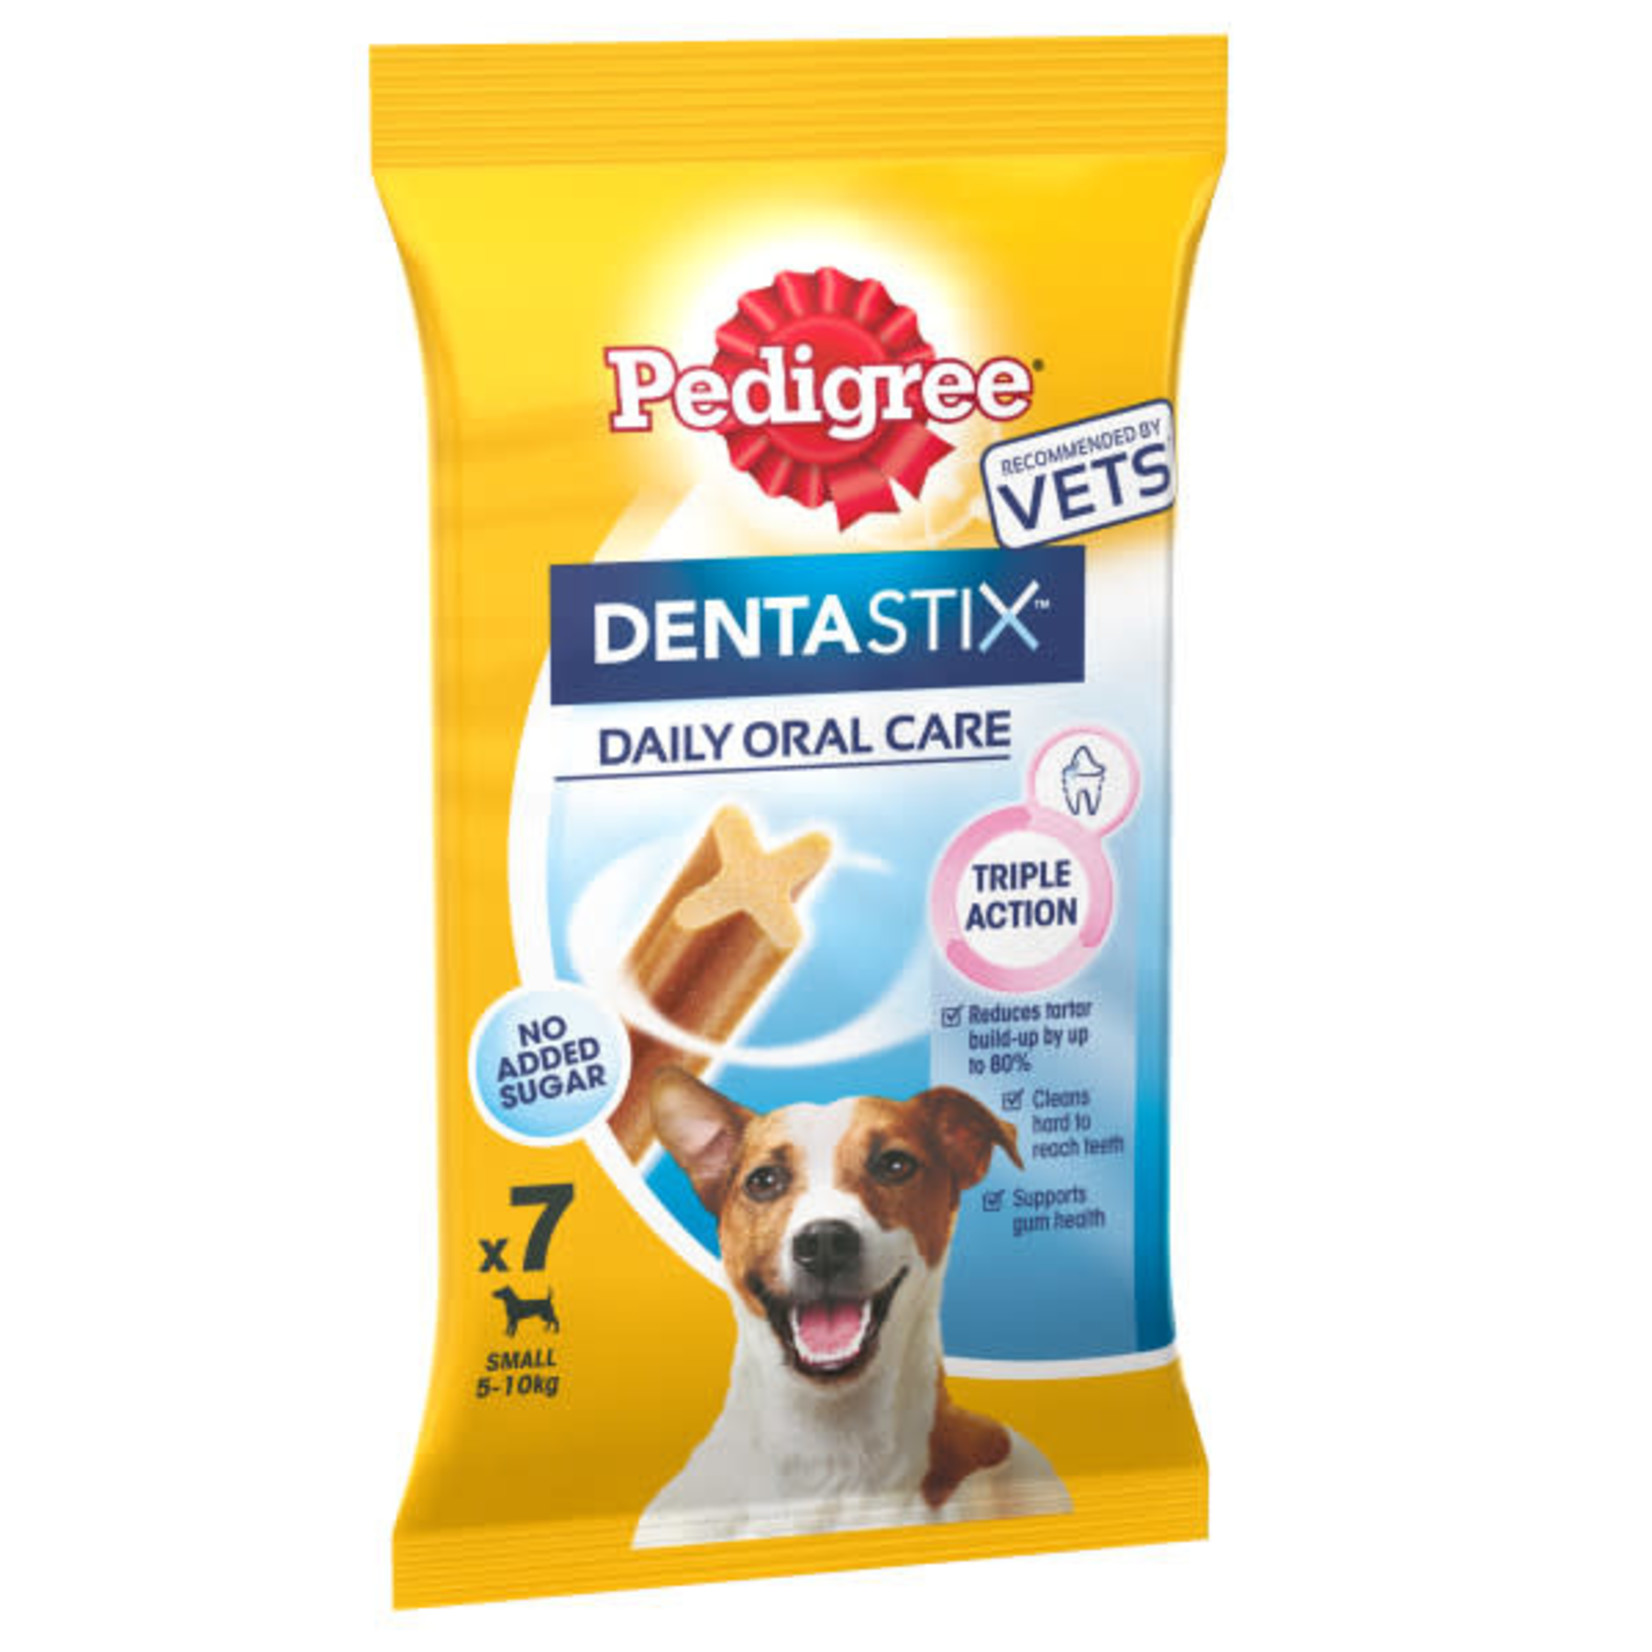 Pedigree Dentastix Daily Oral Care Dental Chews, Small Dog 5 - 10kg